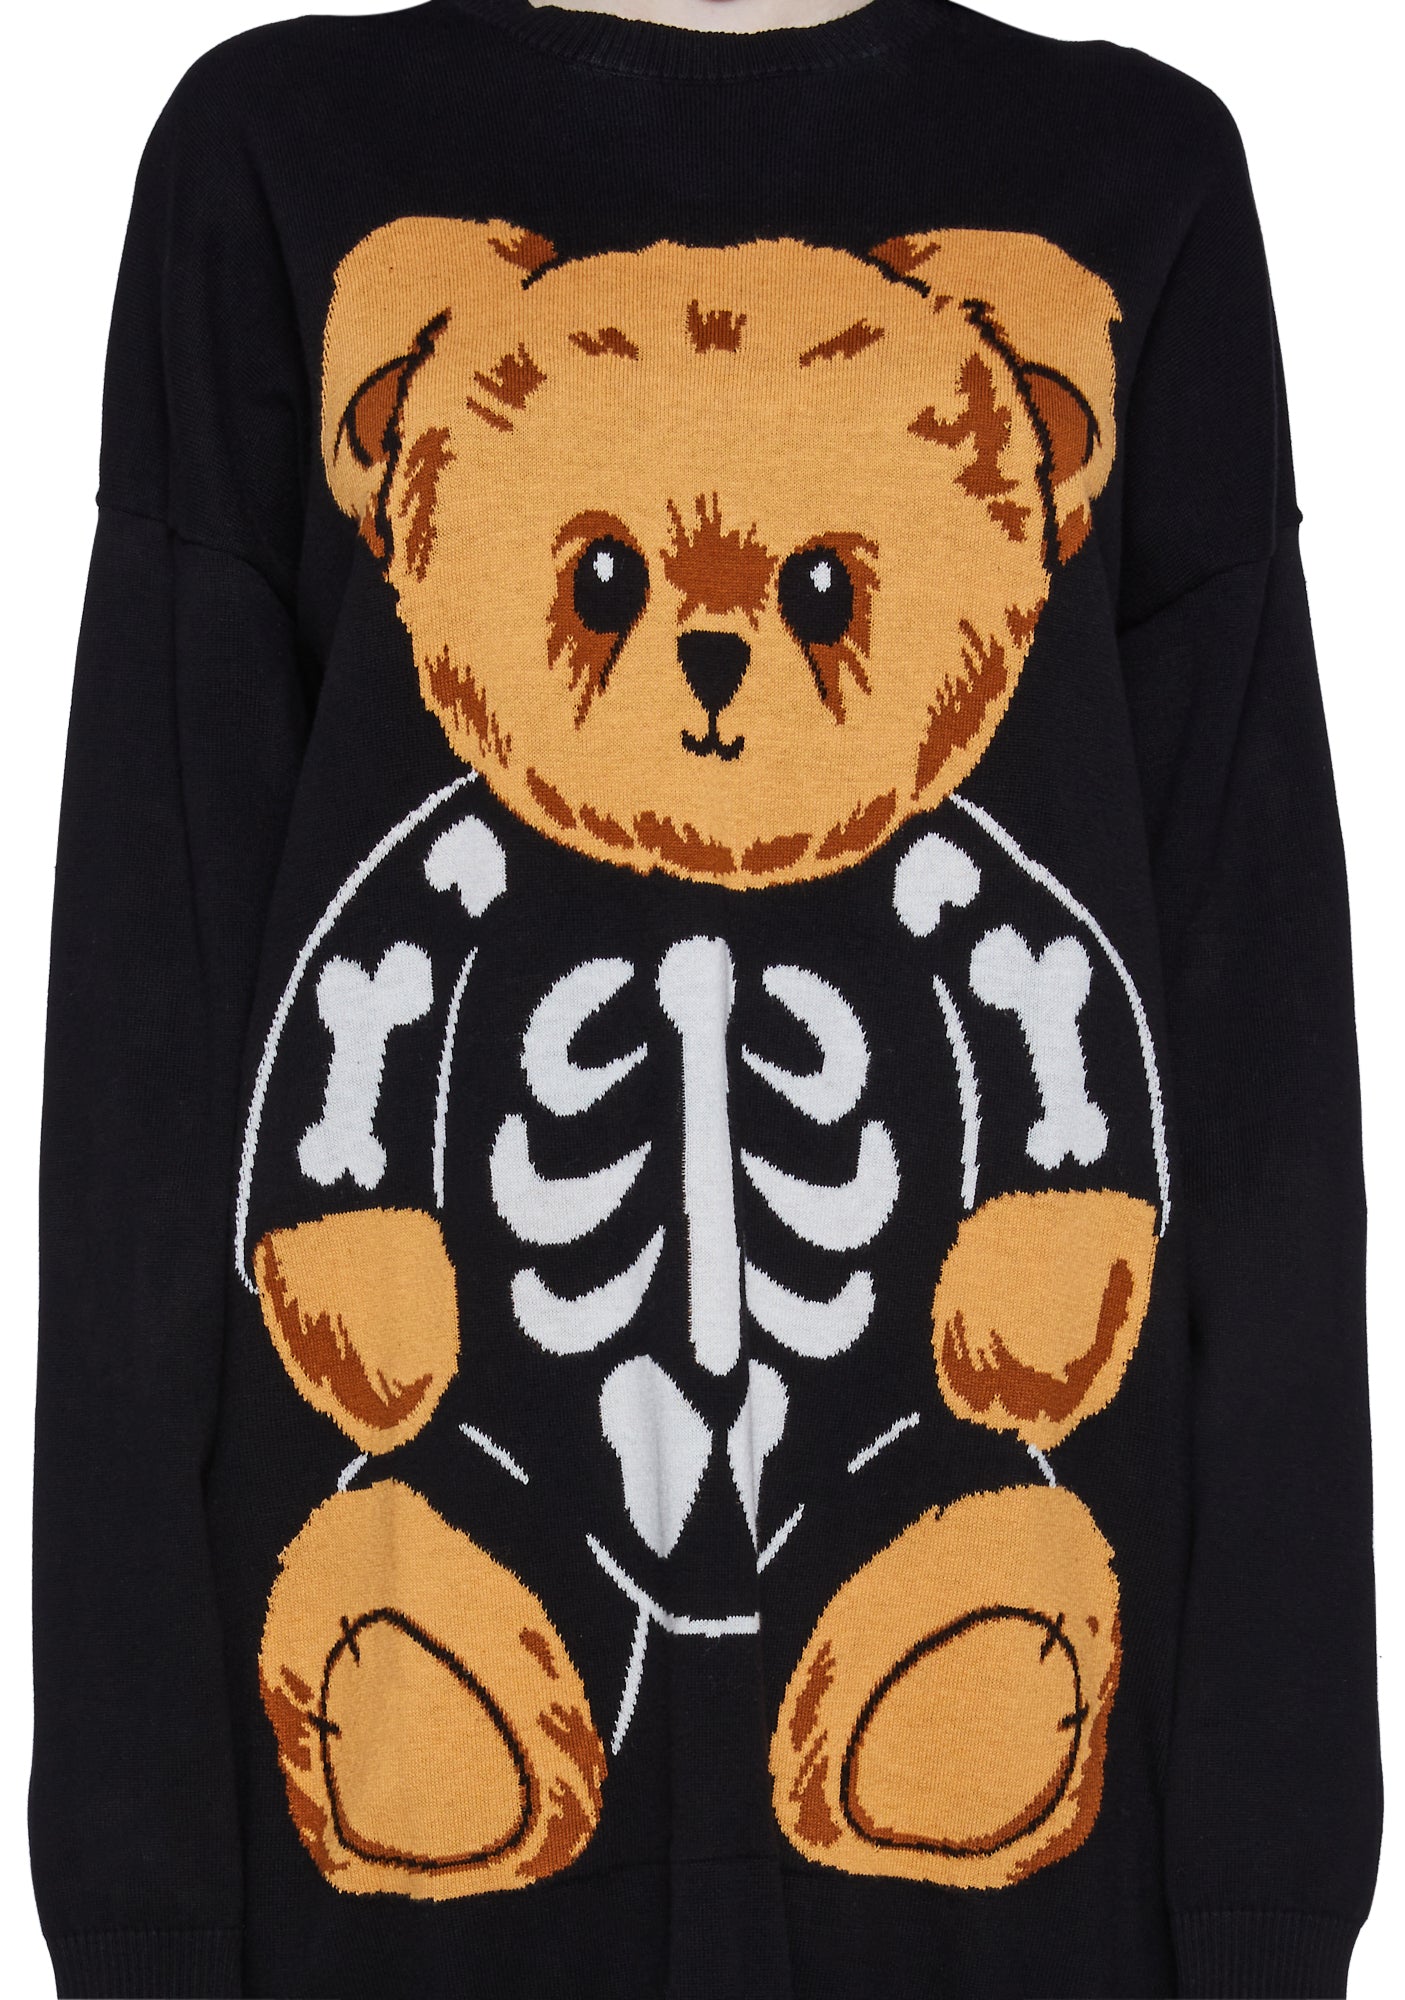 Trickz N' Treatz Skeleton Teddy Bear Oversized Sweater - Black